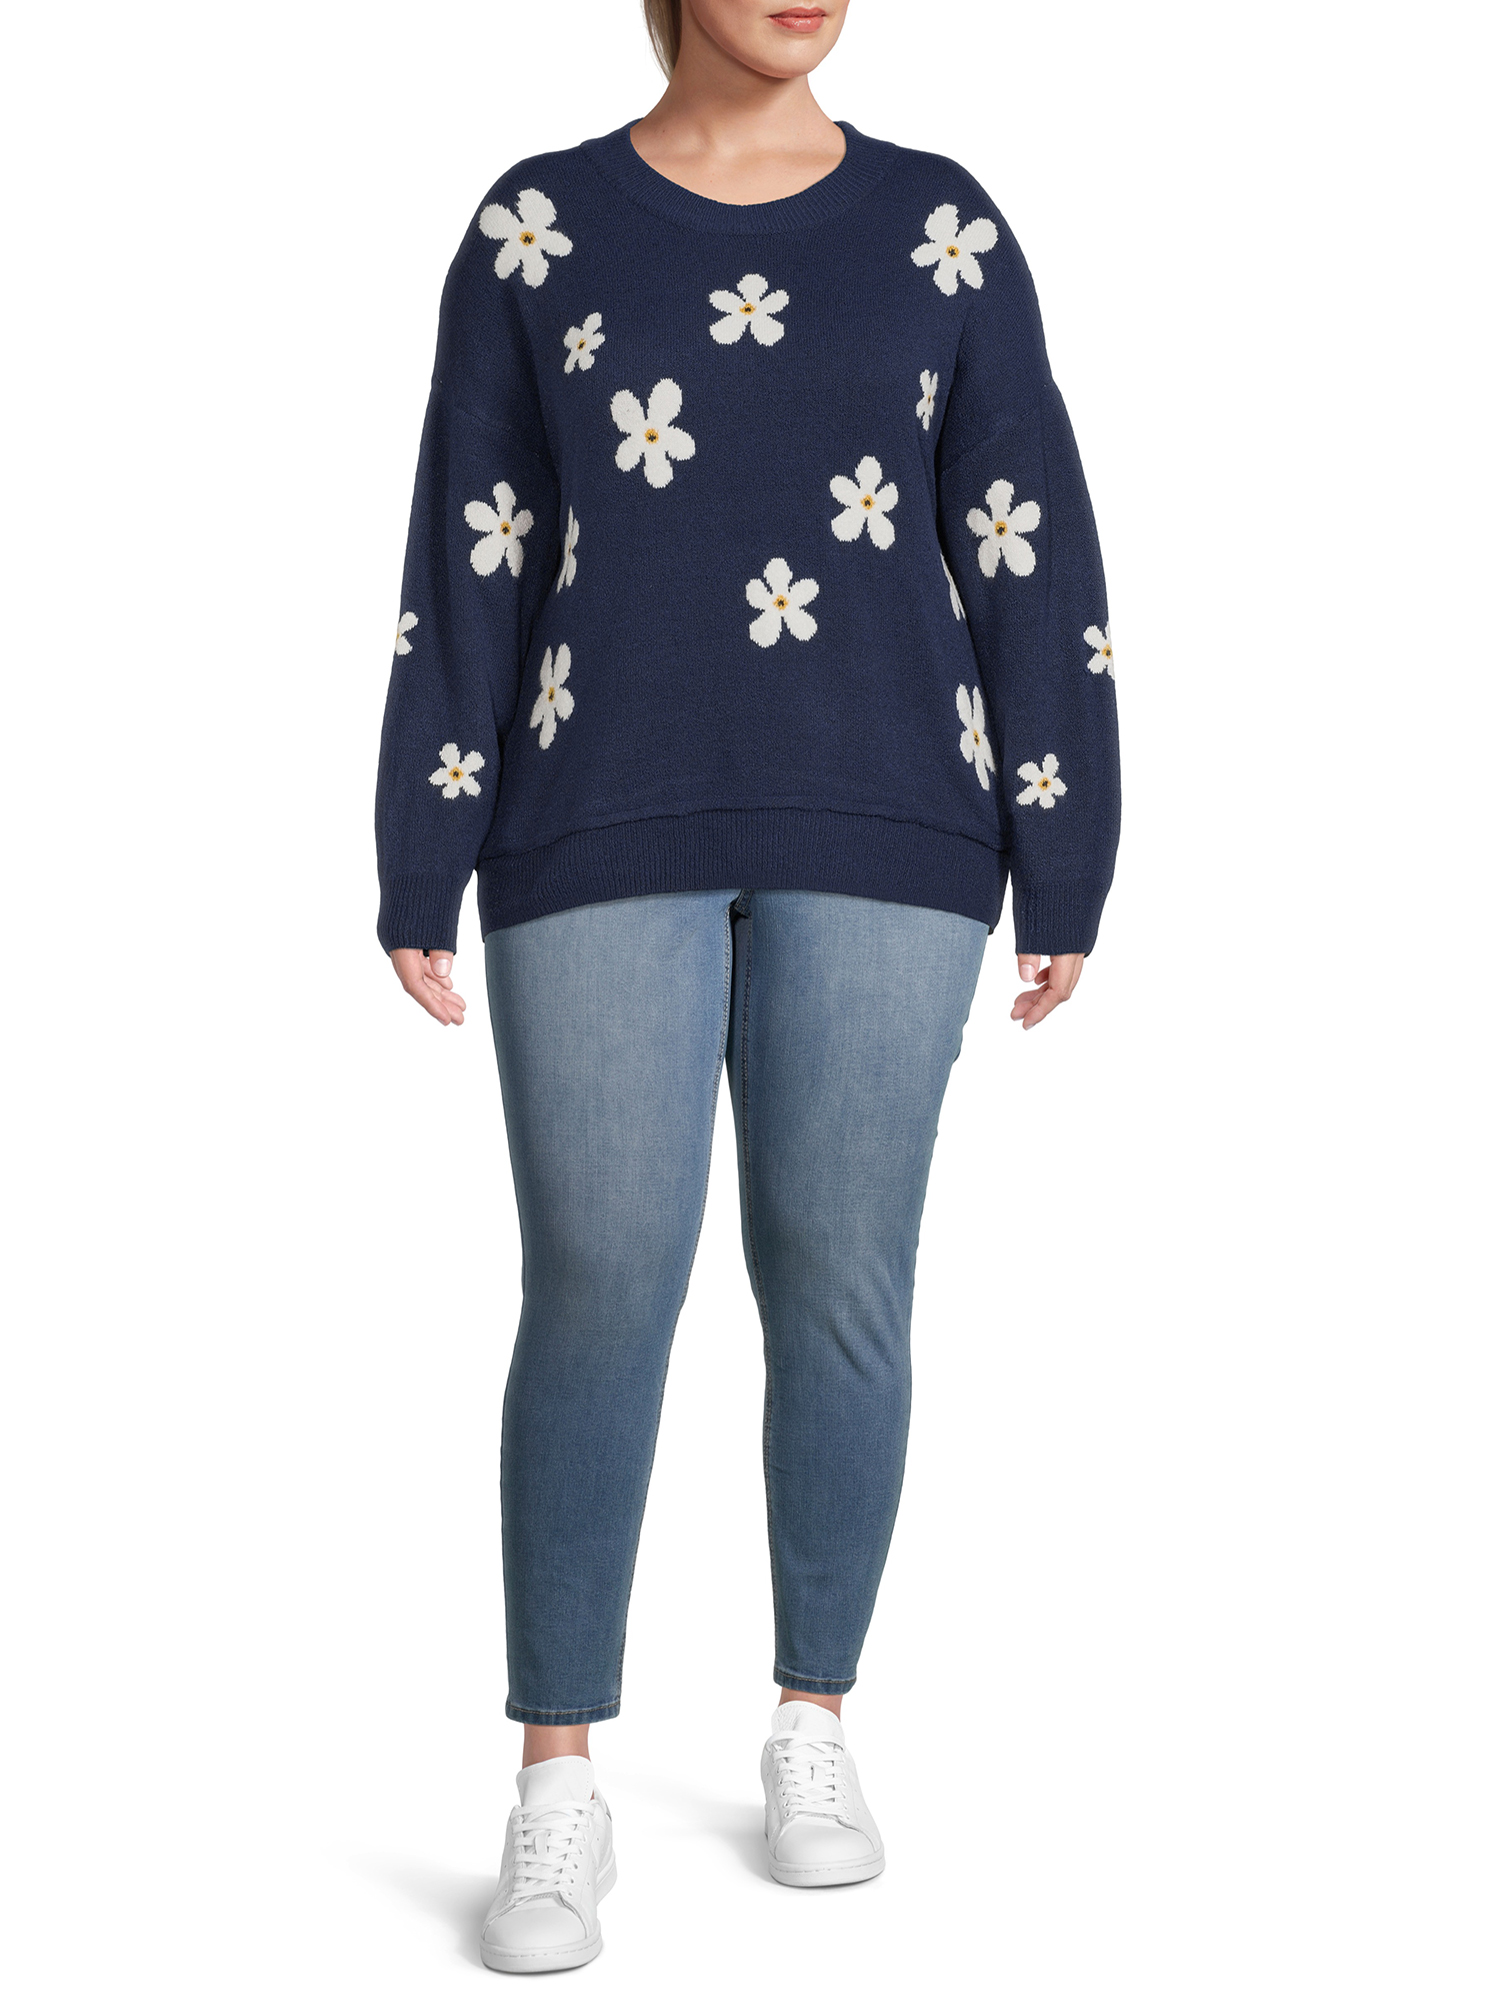 Terra & Sky Women's Plus Size Drop Shoulder Print Sweater, Midweight - image 5 of 5